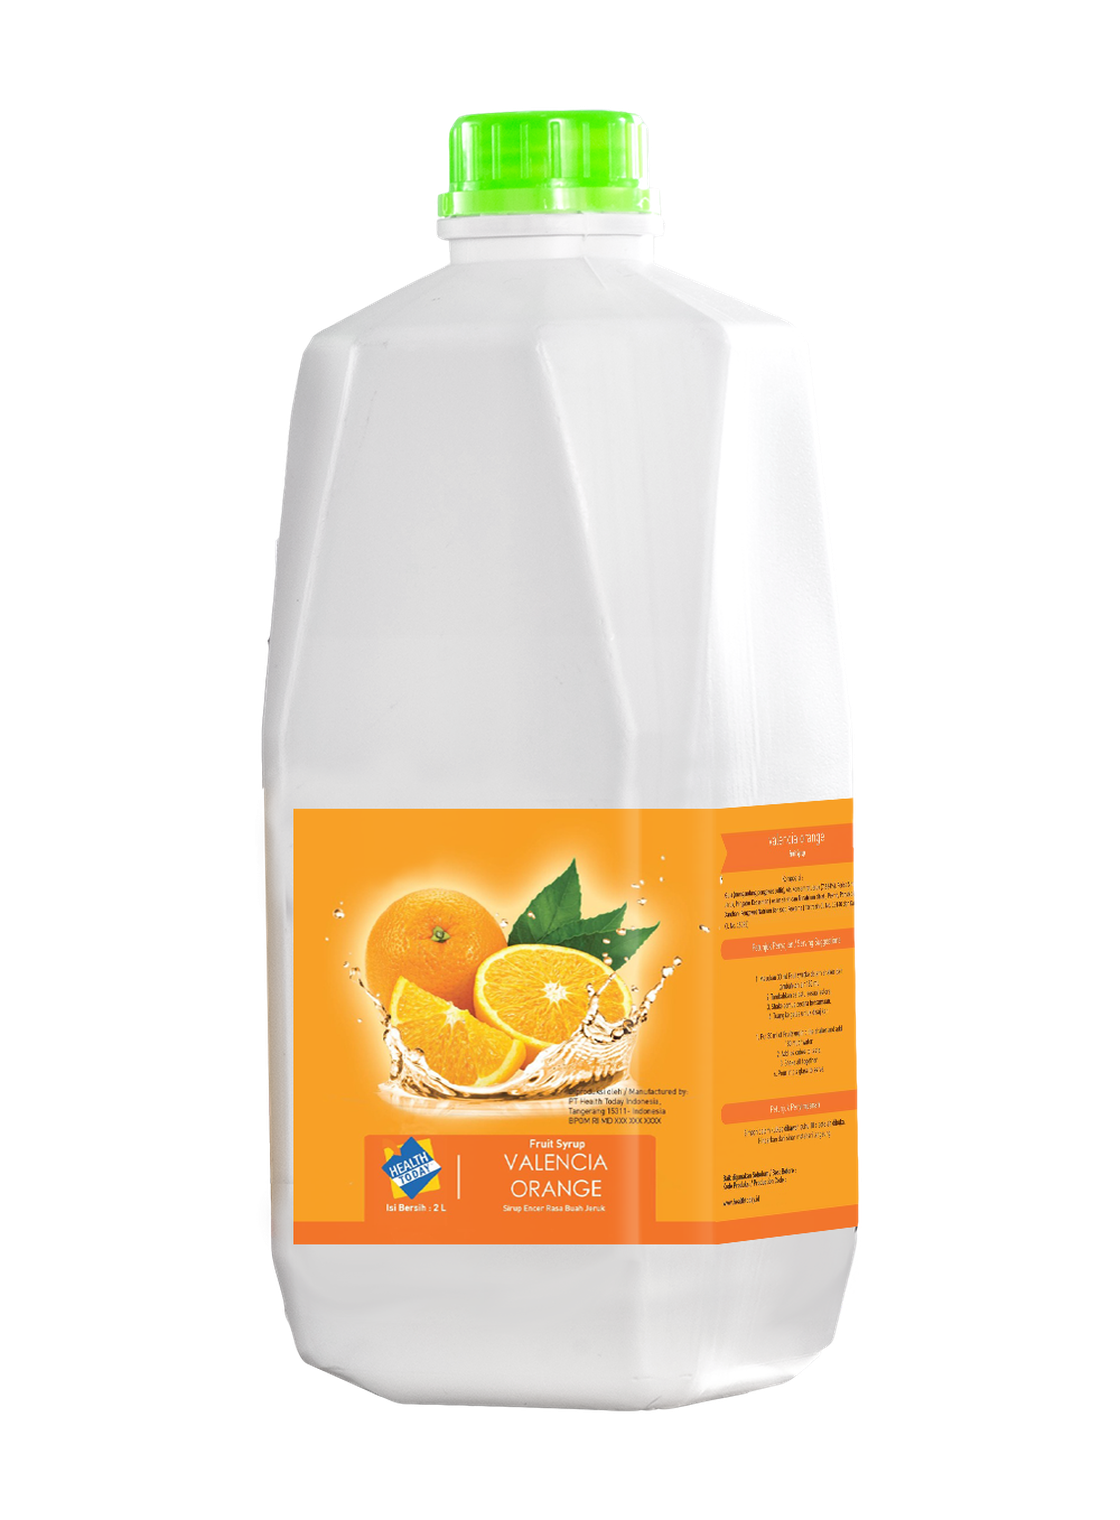 30 ml Health Today Orange Fruit Mix